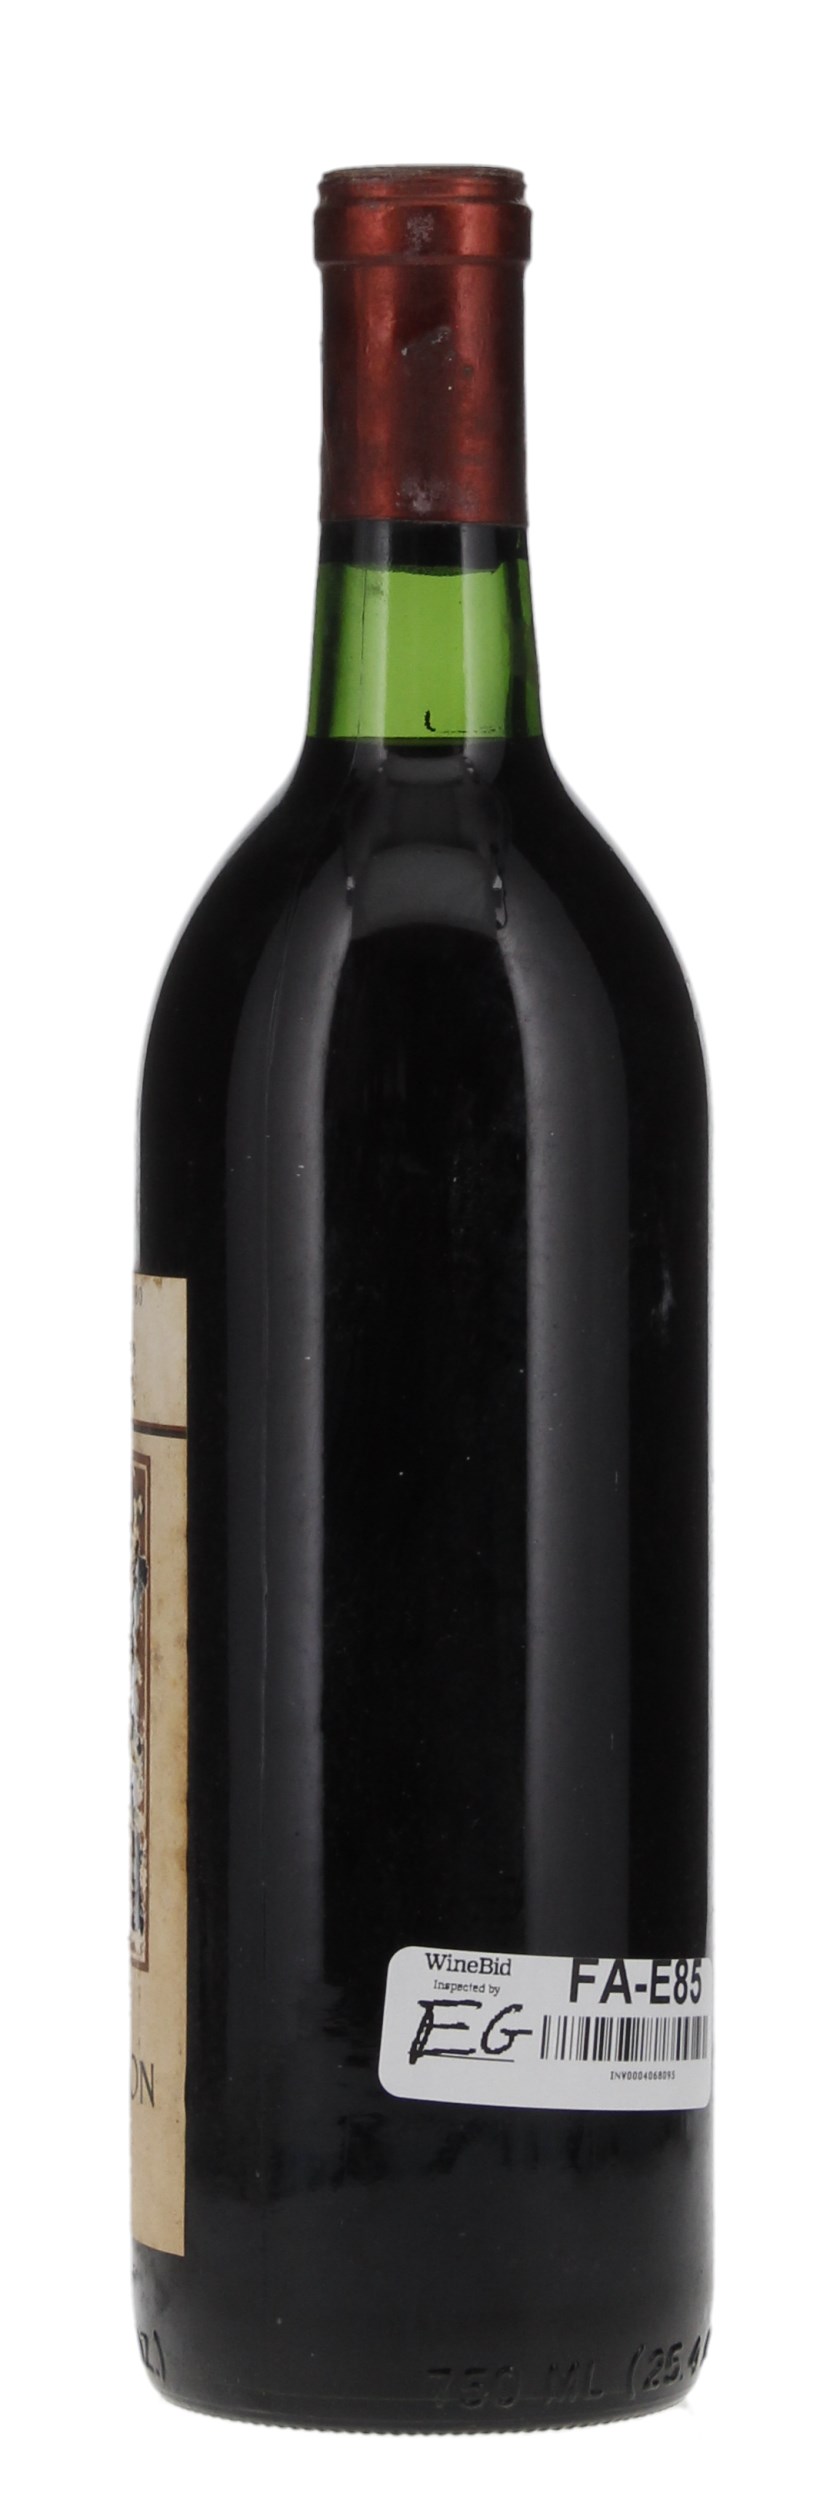 1976 Heitz Martha's Vineyard Cabernet Sauvignon, 750ml